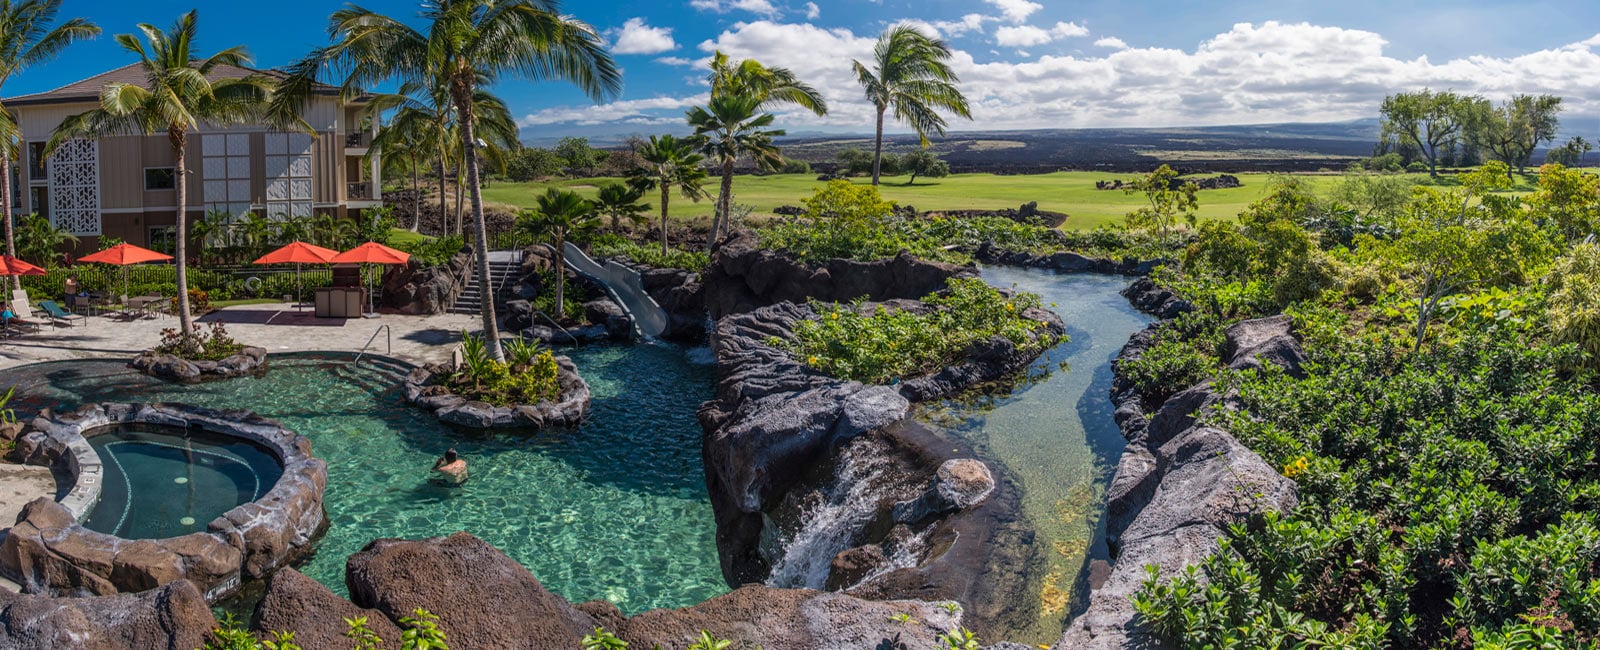 Pool Area of Kings' Land Resort in Waikoloa, Hawaii